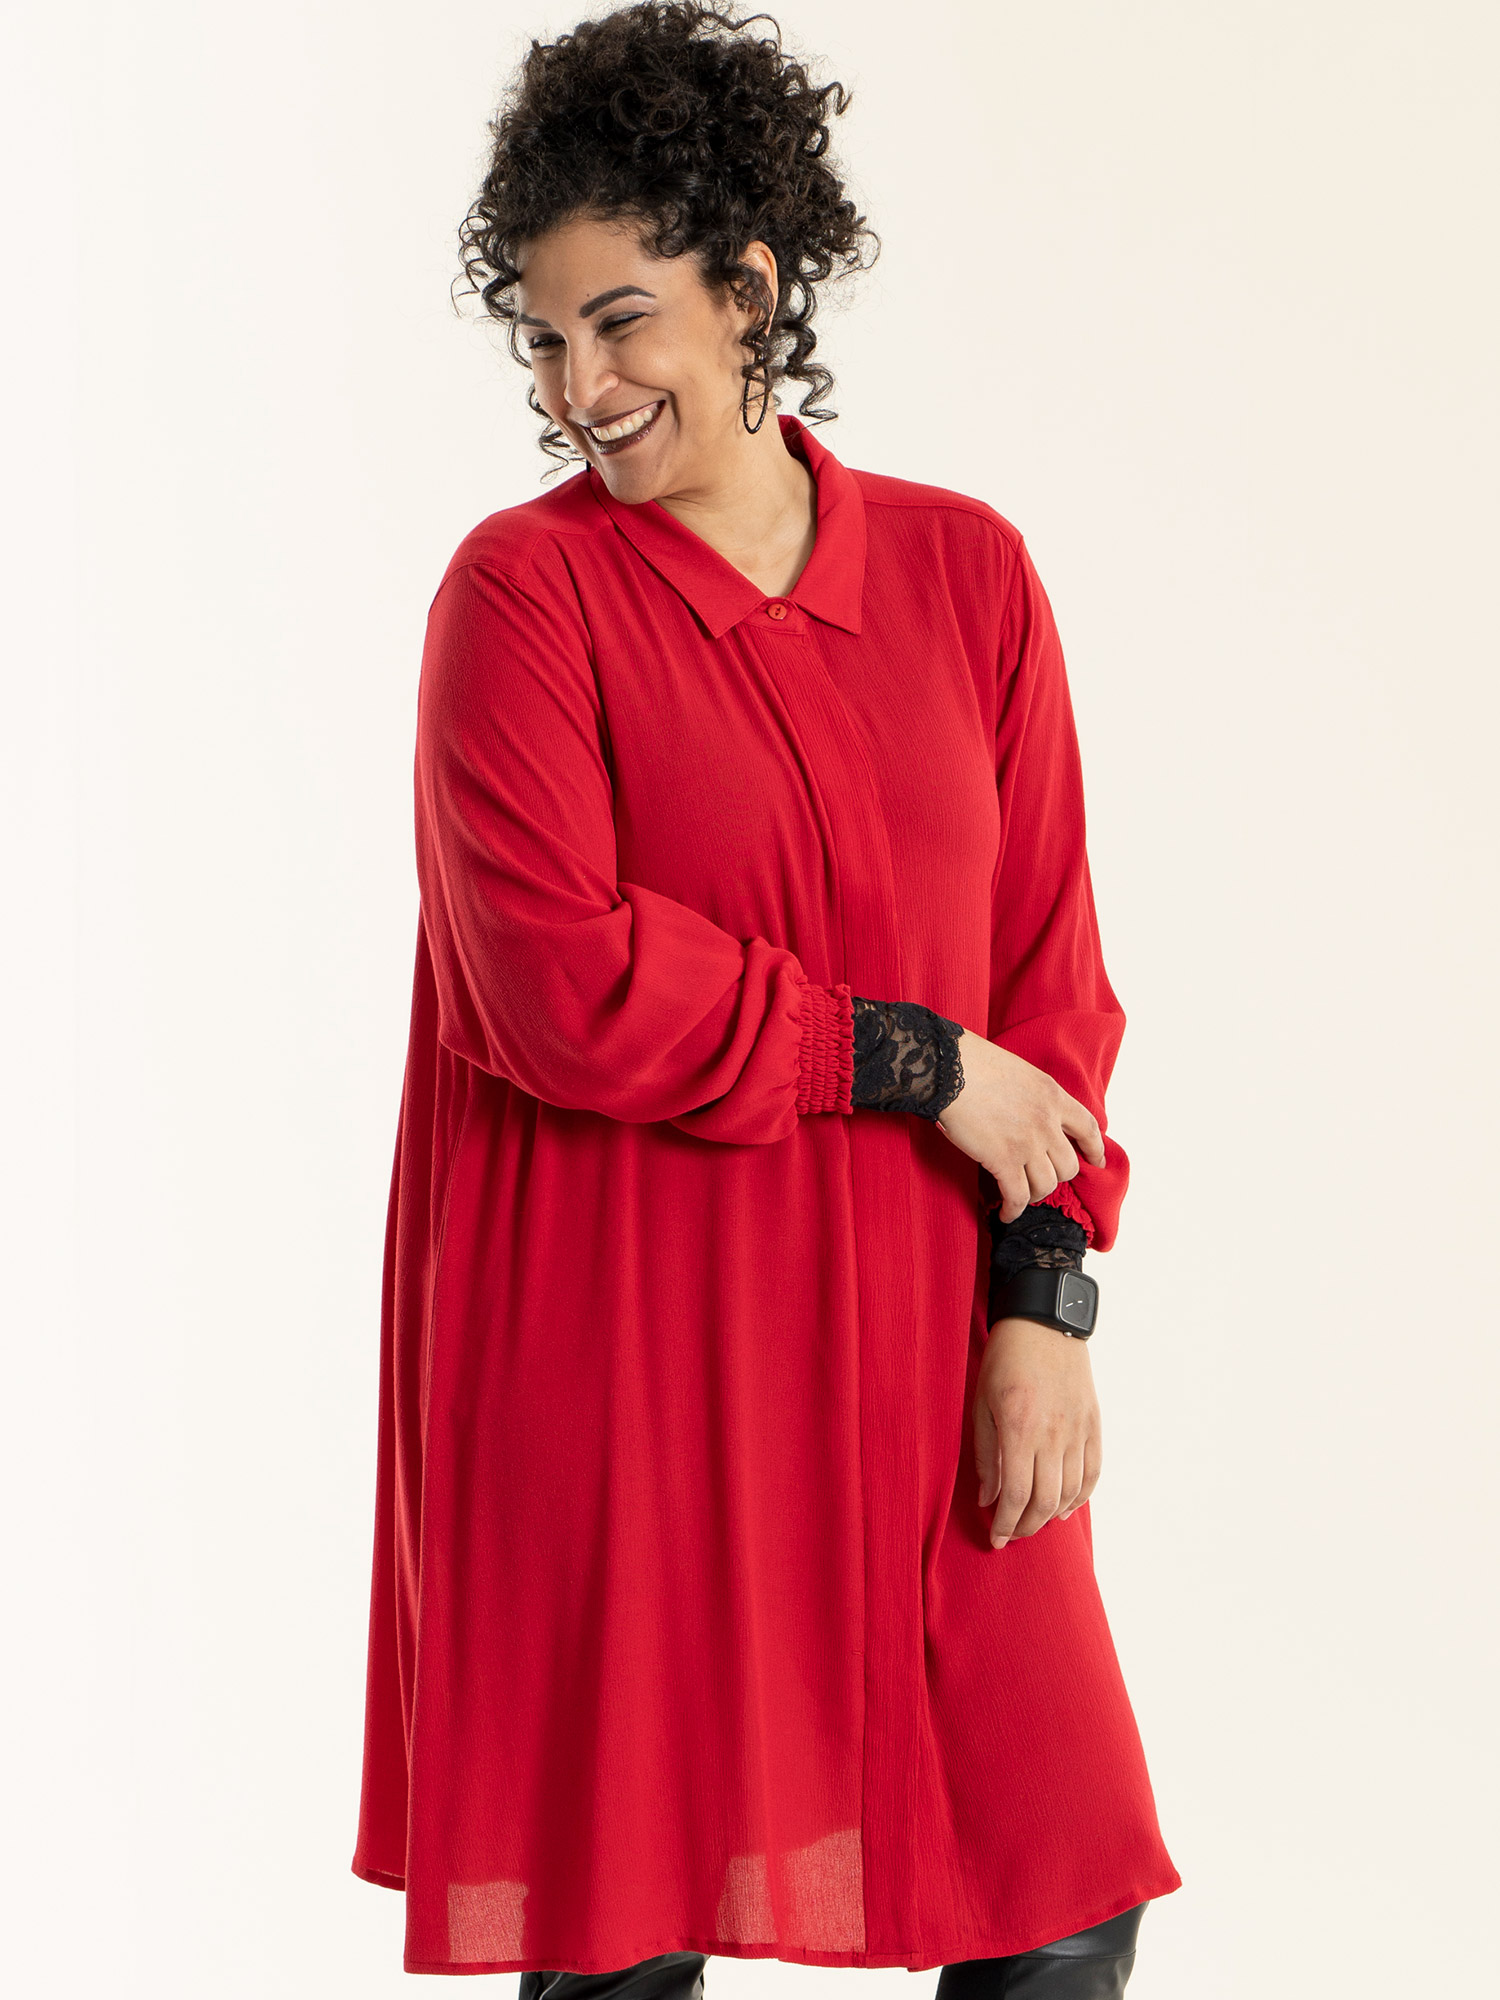 EMILIE - Viskose skjorte tunika i flot rød fra Studio